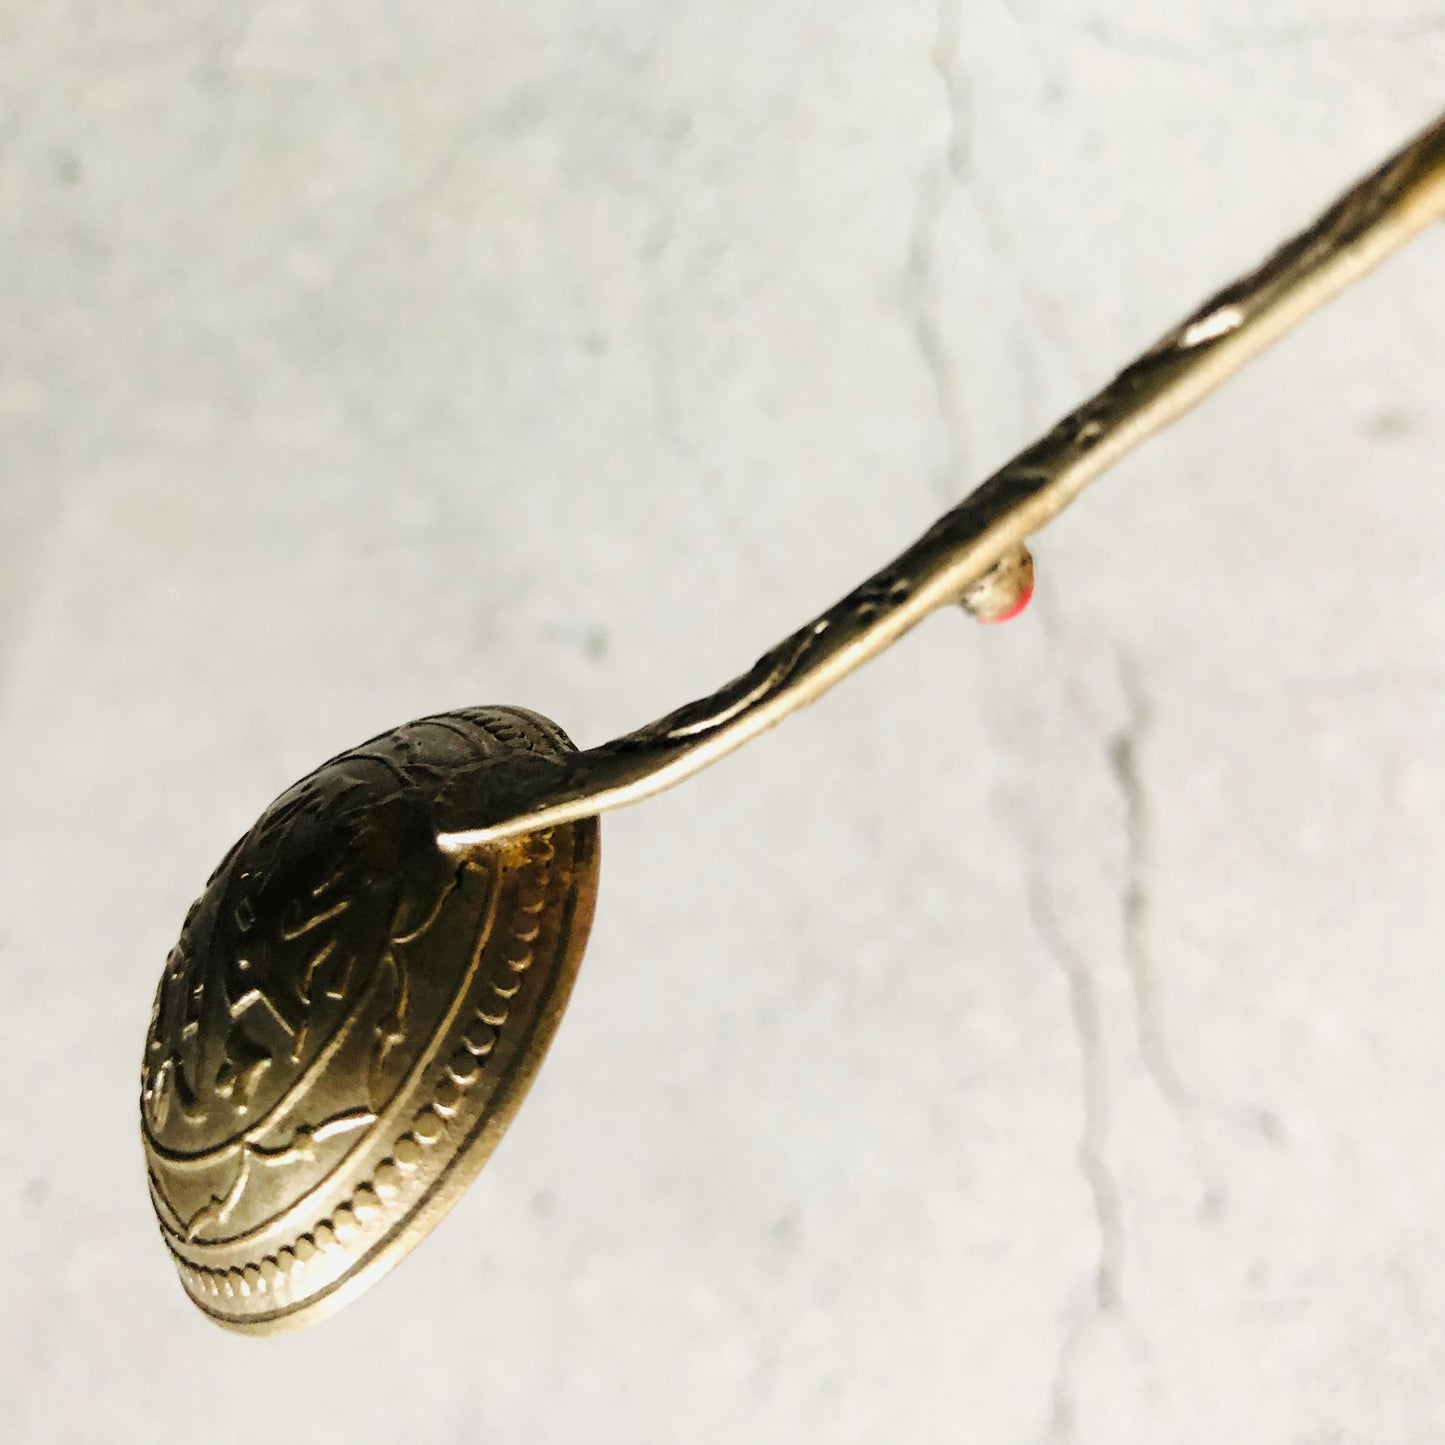 Antique Egyptian Revival Spoon